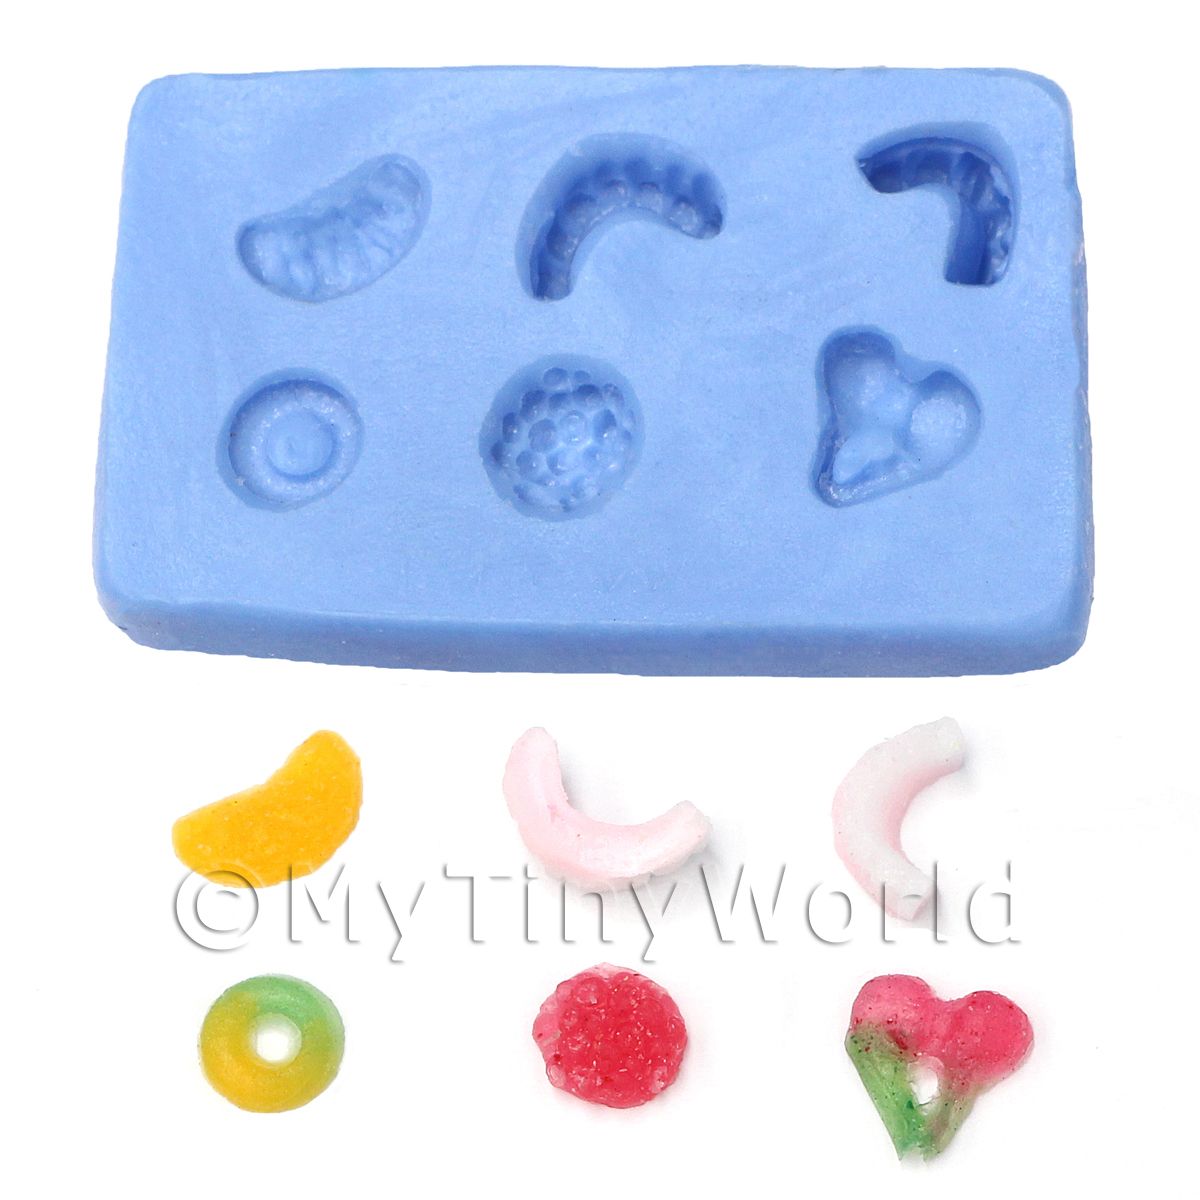 Miniature Gummy Bear Mold Dollhouse Miniature Candy Mold